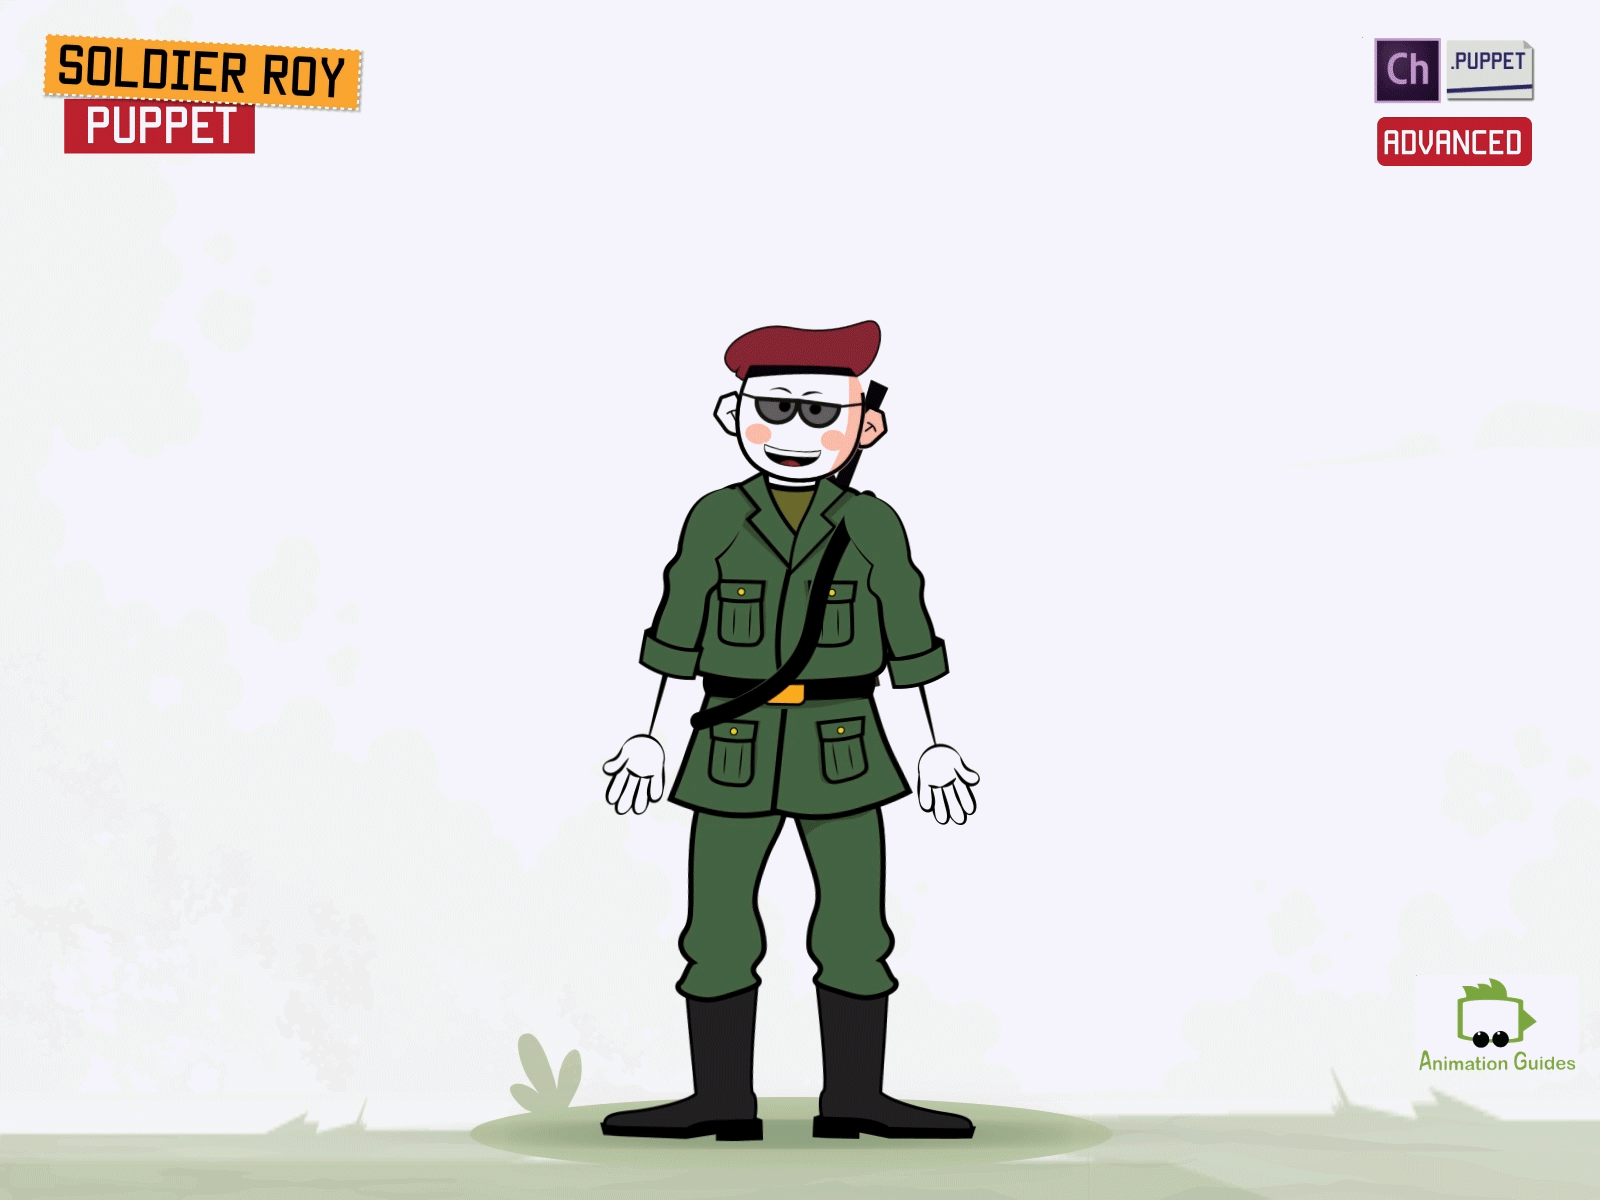 Meet Soldier Roy ... ✋